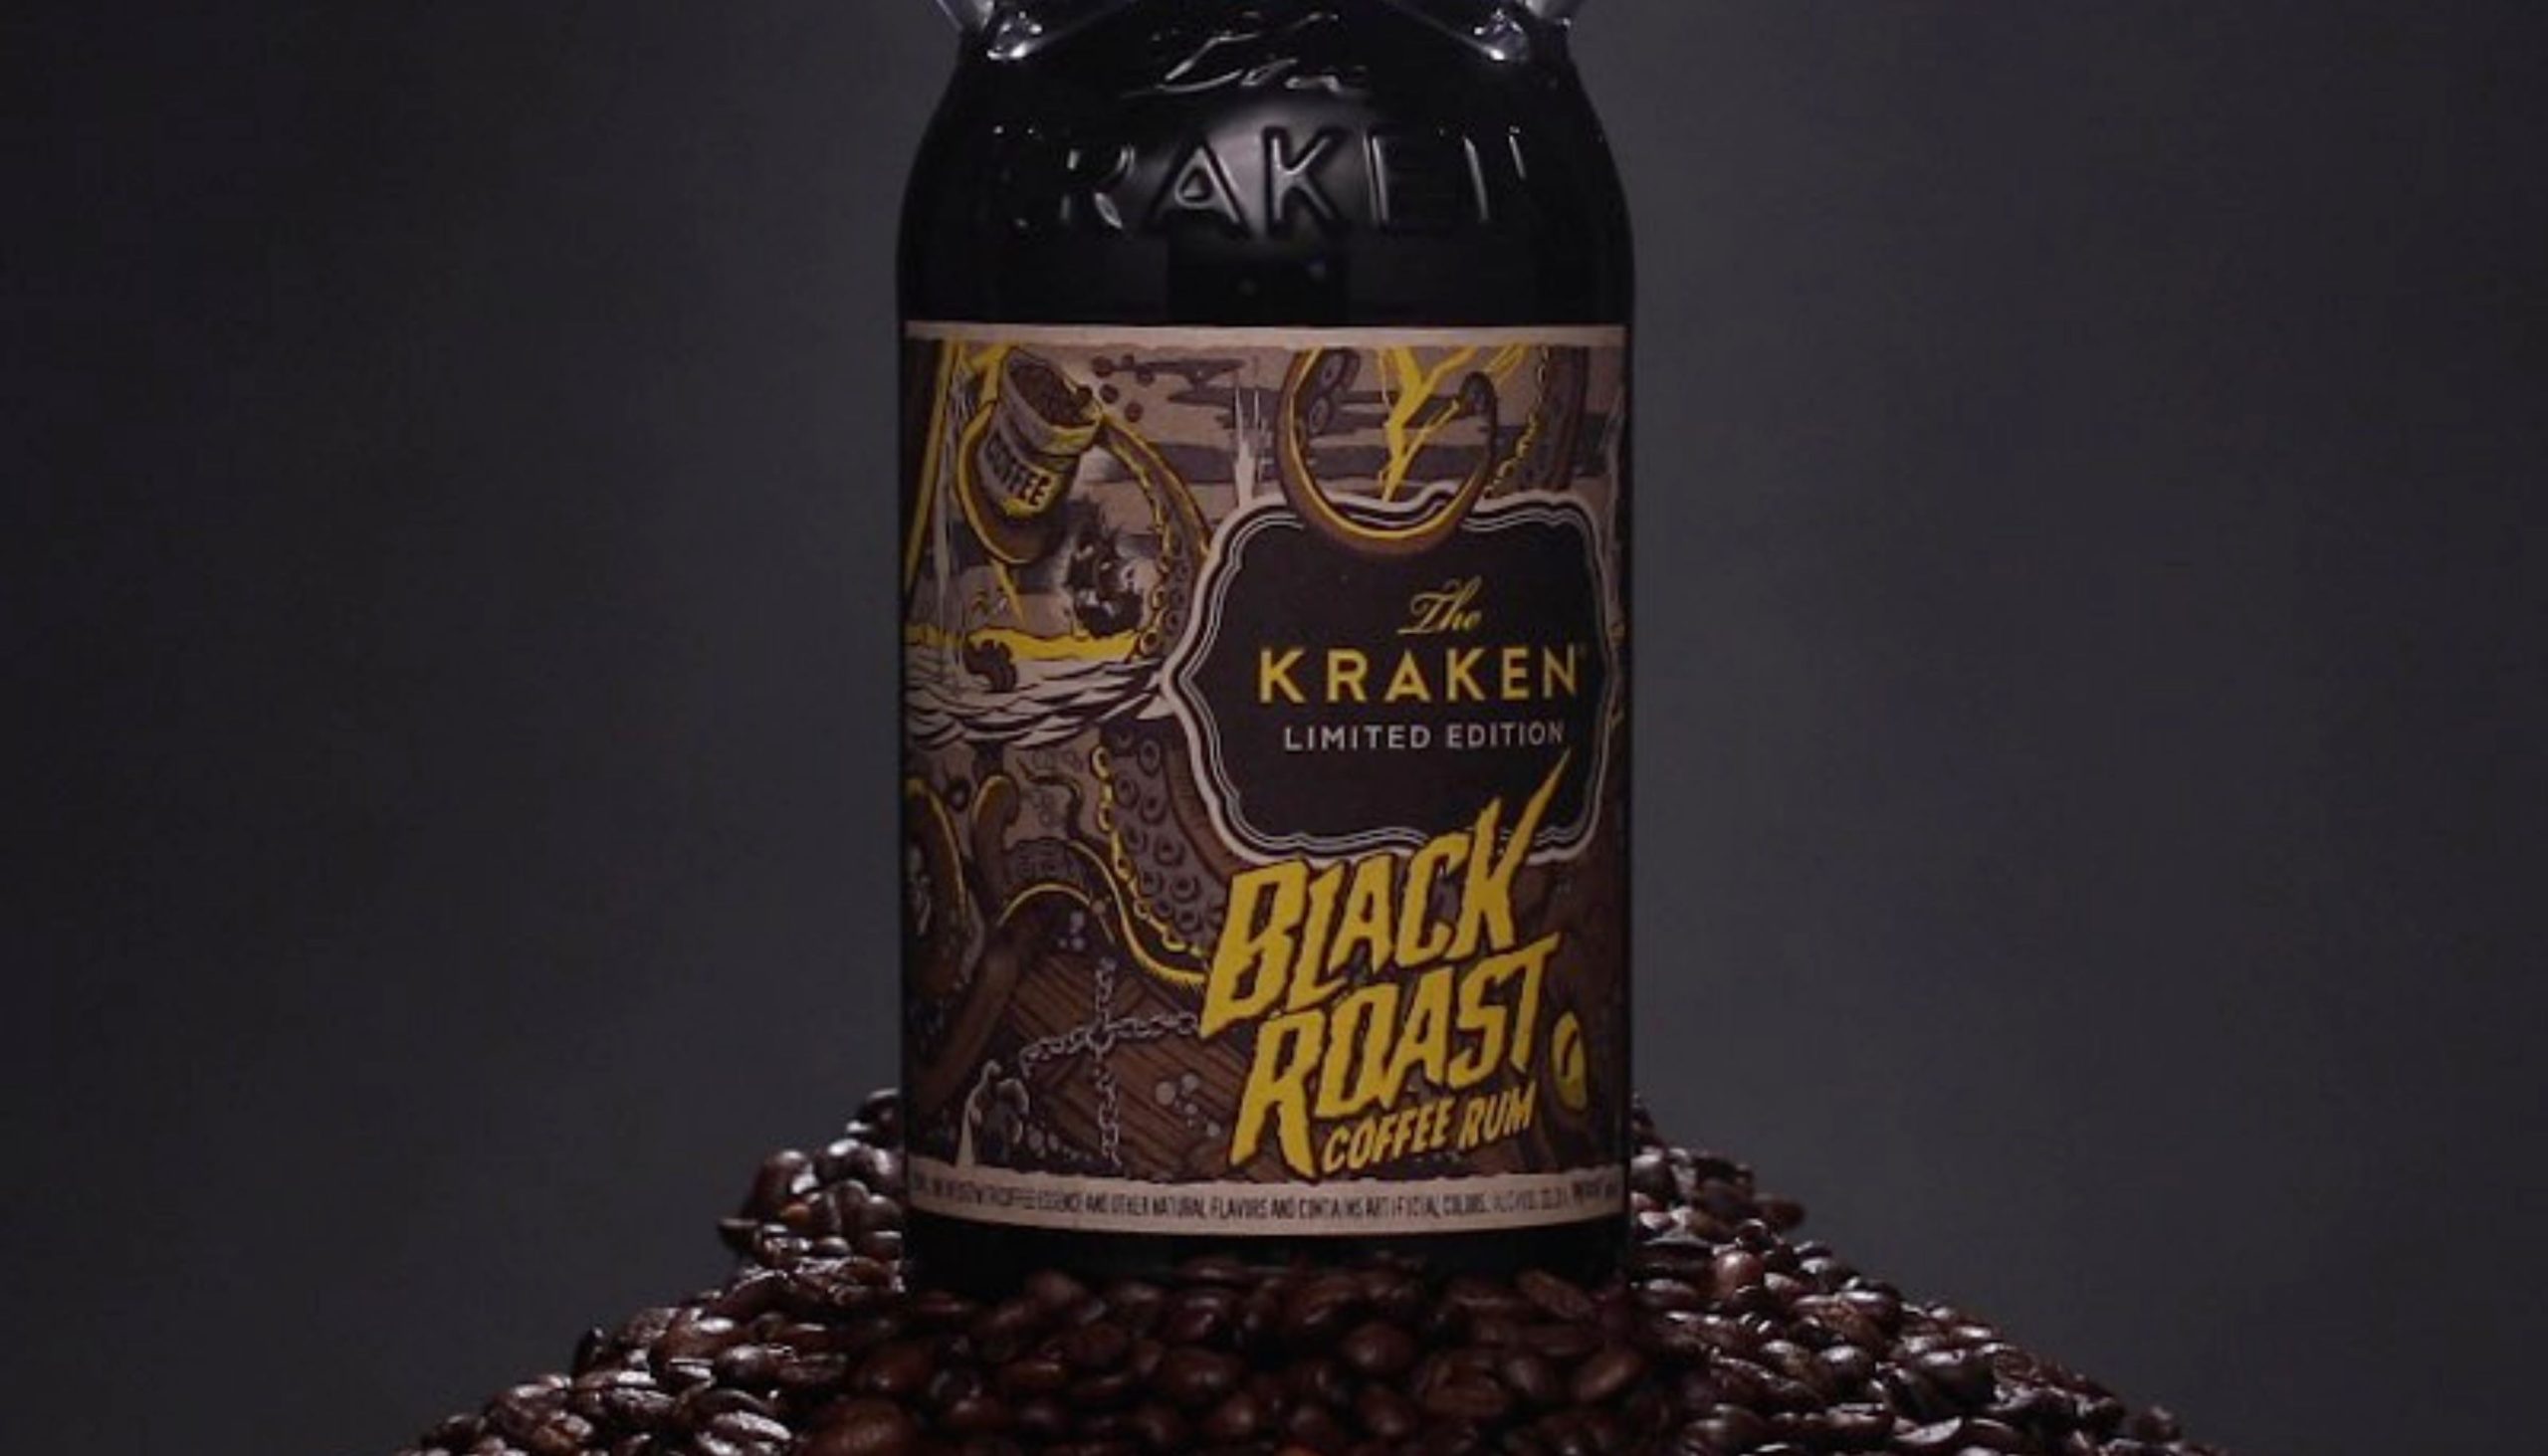 Get your tentacles on this Kraken Black Roast Coffee Rum (with dark branding by Stranger & Stranger)